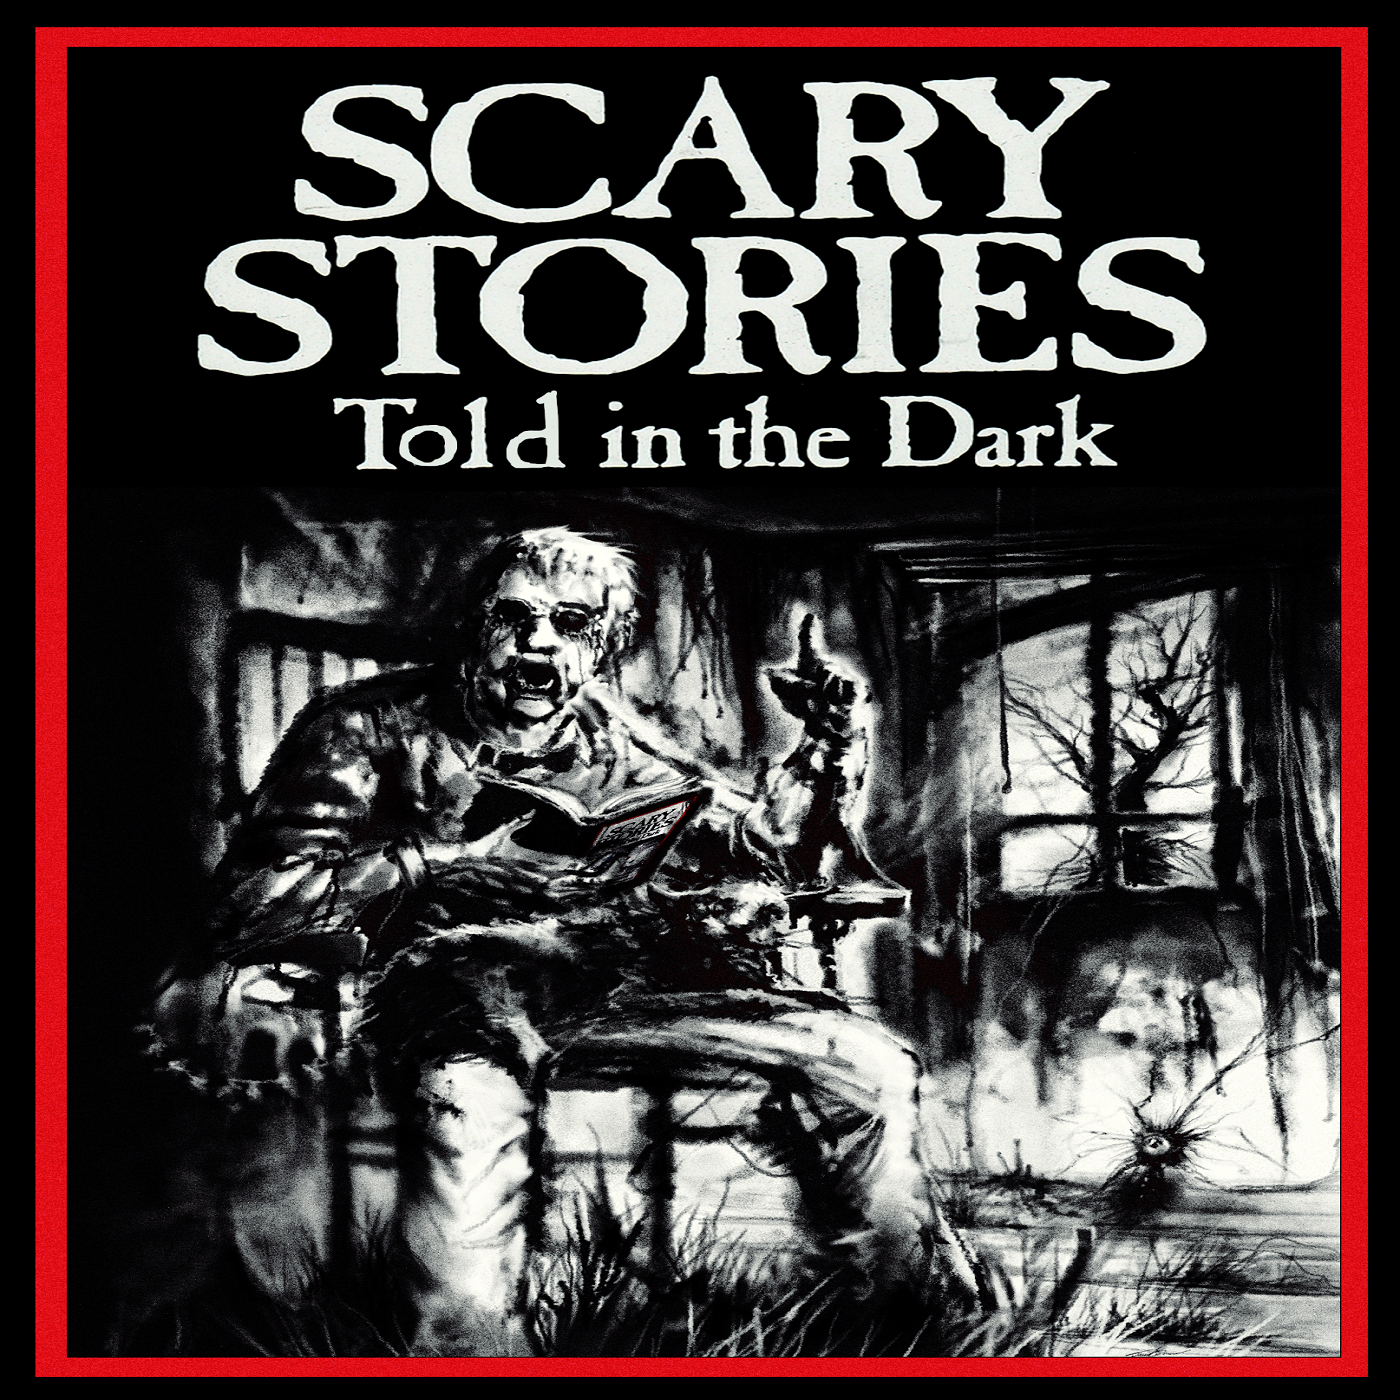 Scary Stories Told in the Dark | Listen via Stitcher Radio ... - 1400 x 1400 png 2717kB